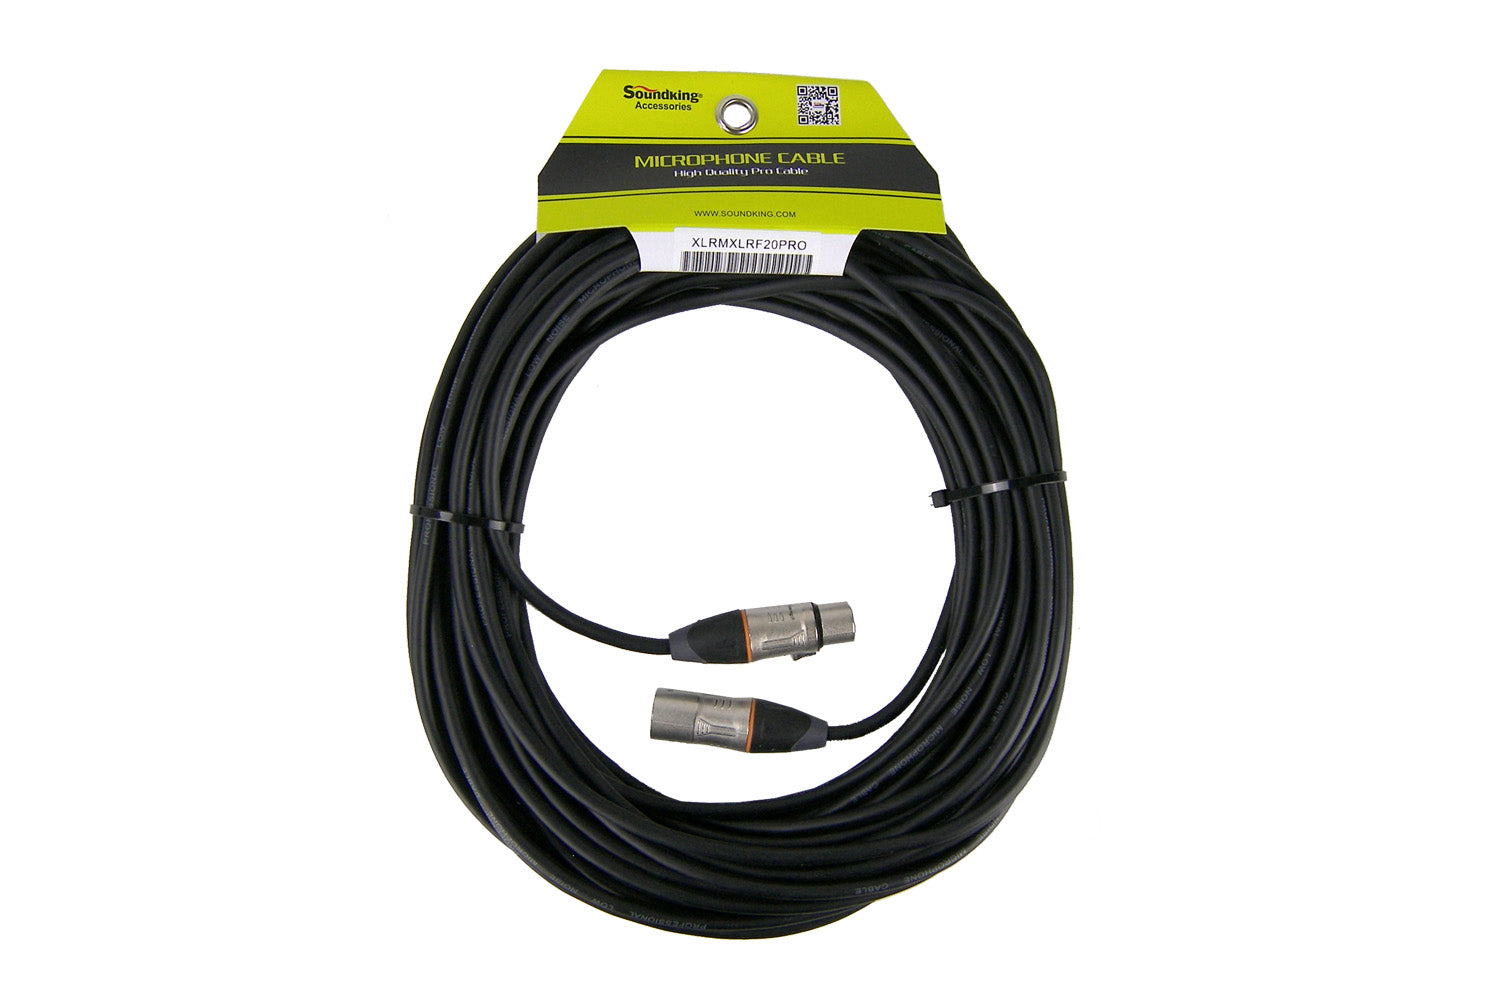 XLRMXLRF20PRO - 20m XLR 3 pin male to female professional grade cable